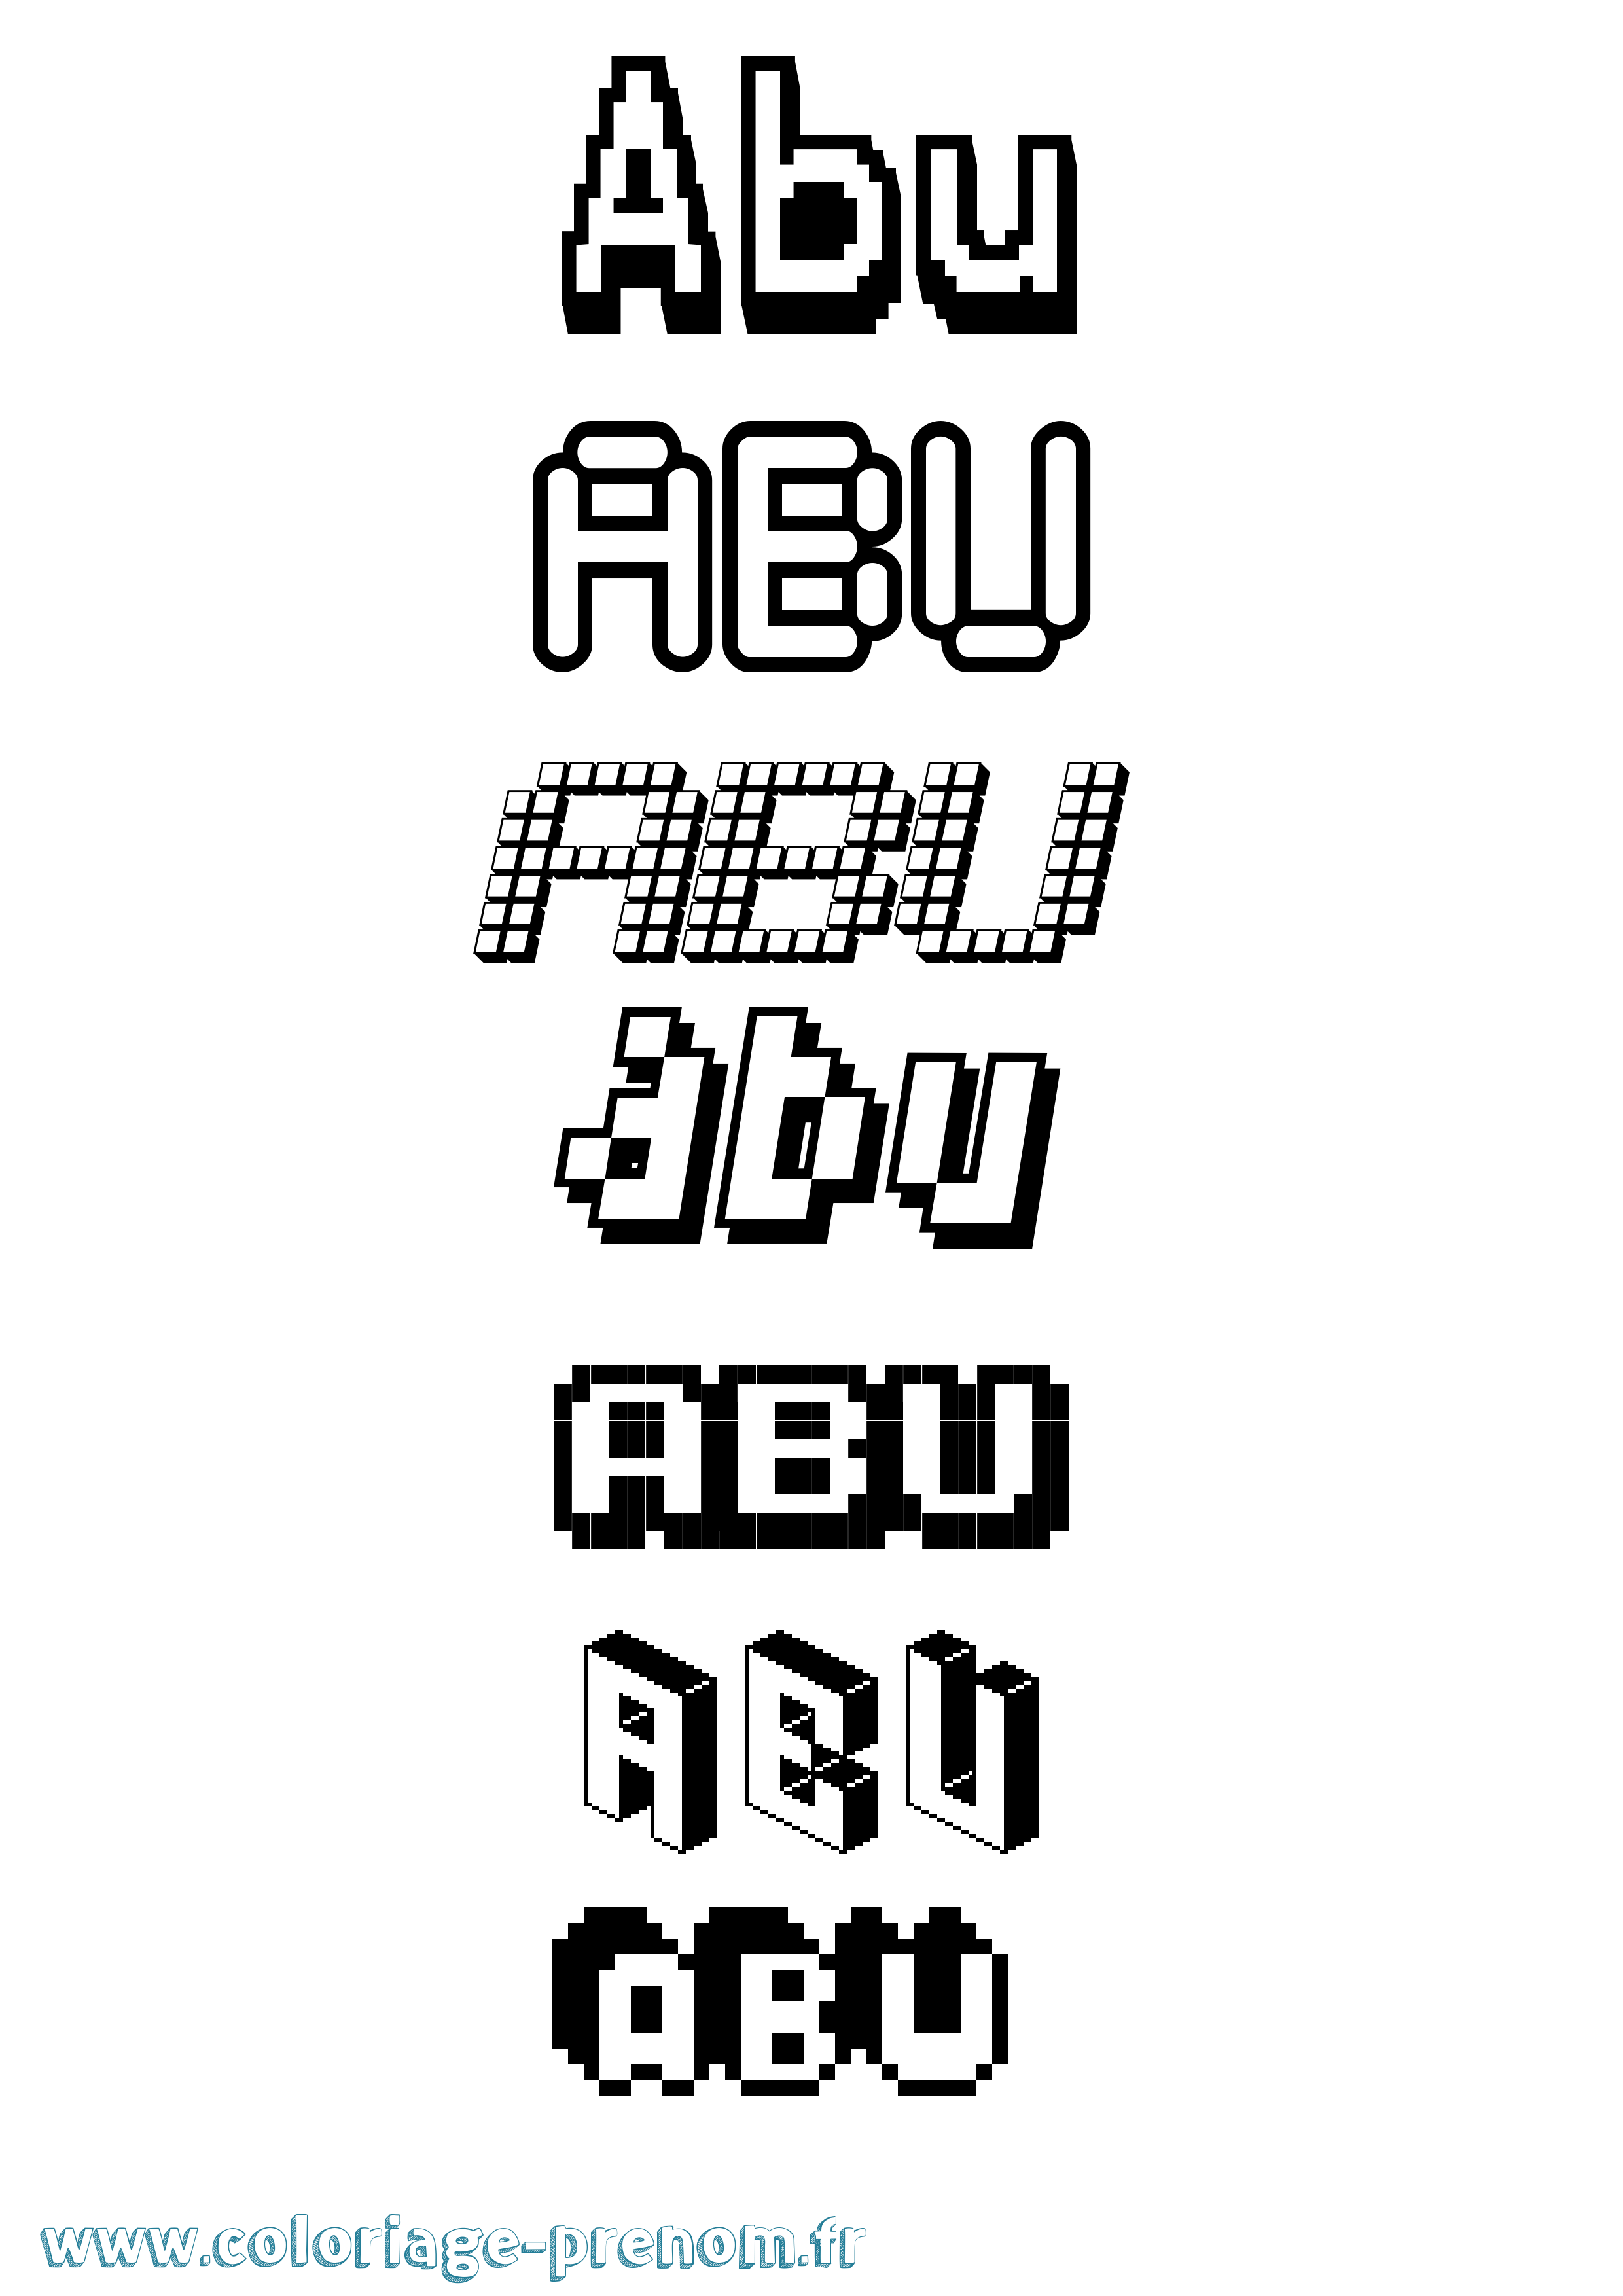 Coloriage prénom Abu Pixel